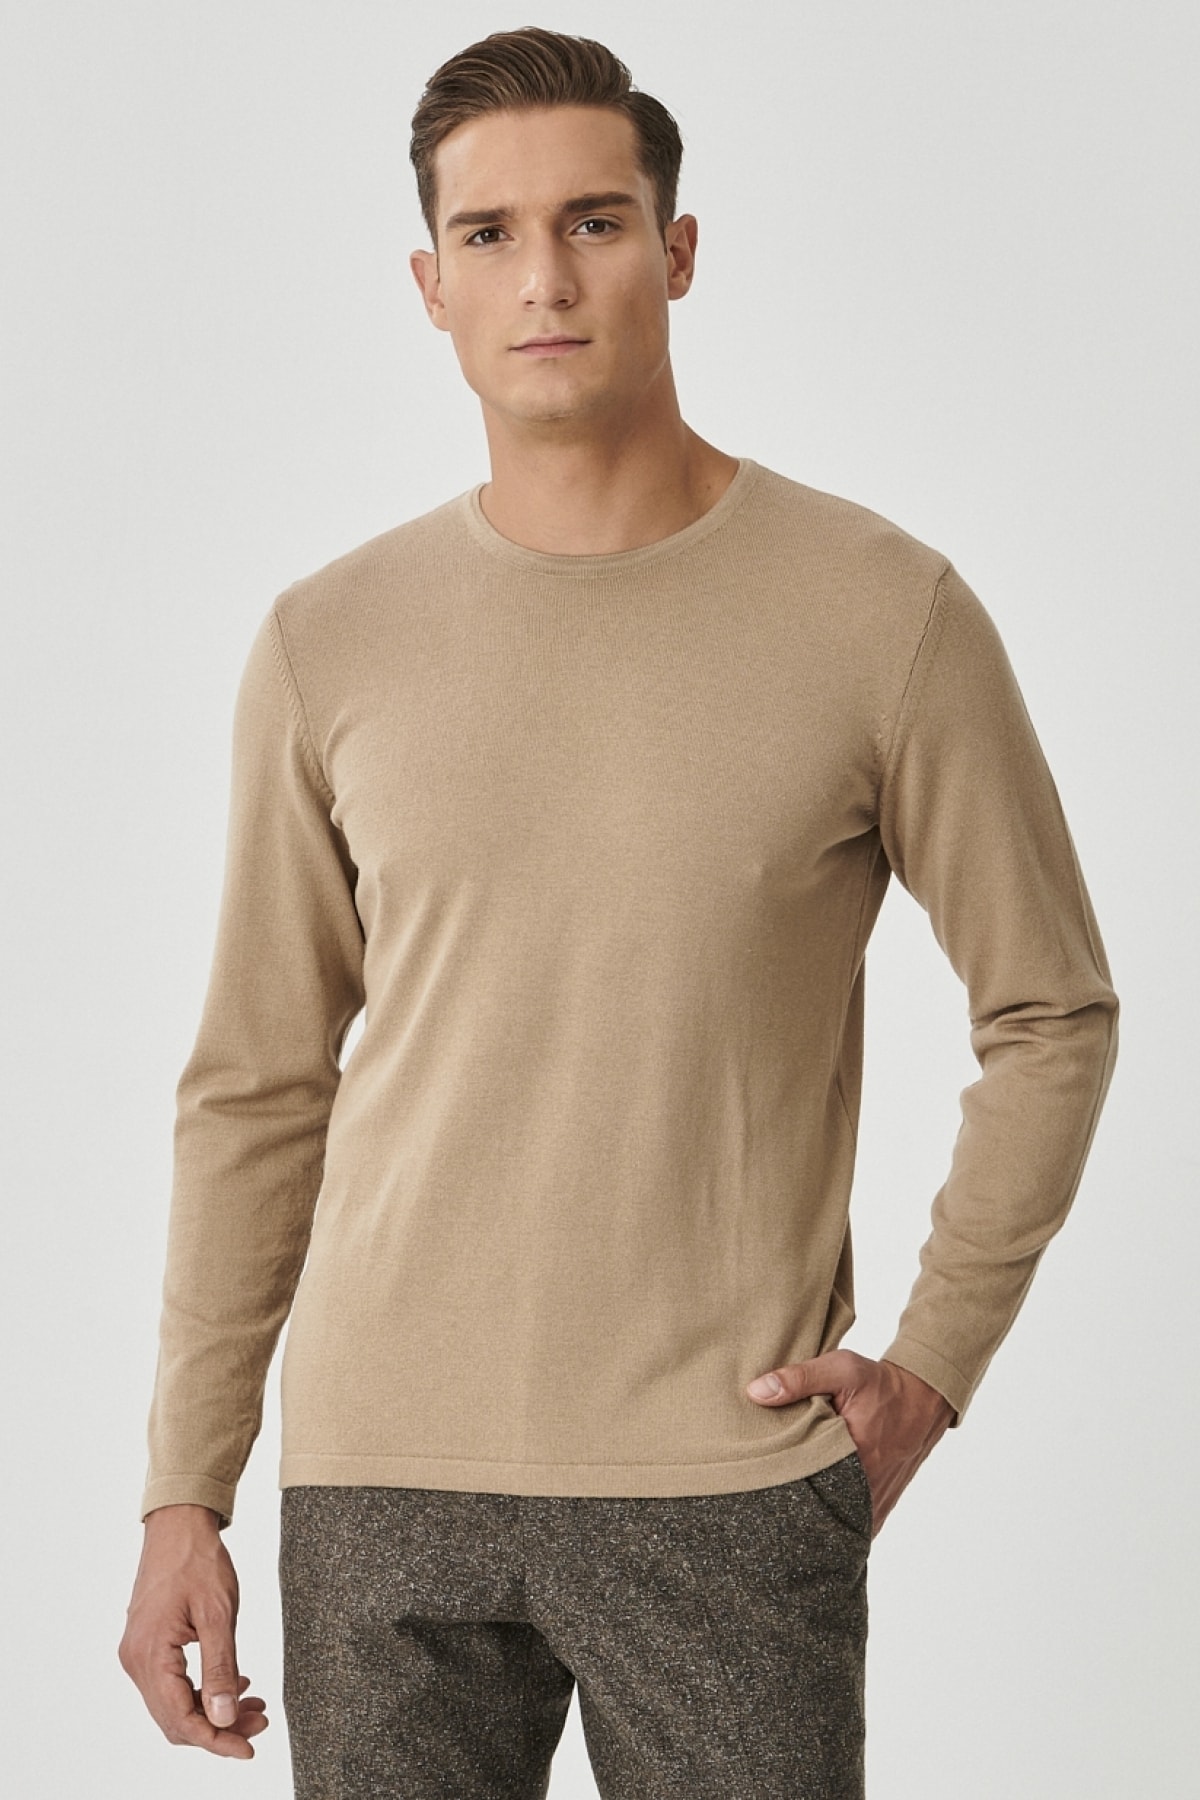 ALTINYILDIZ CLASSICS Men's Beige Standard Fit Normal Cut Crew Neck No Pattern Basic Knitwear Sweater.